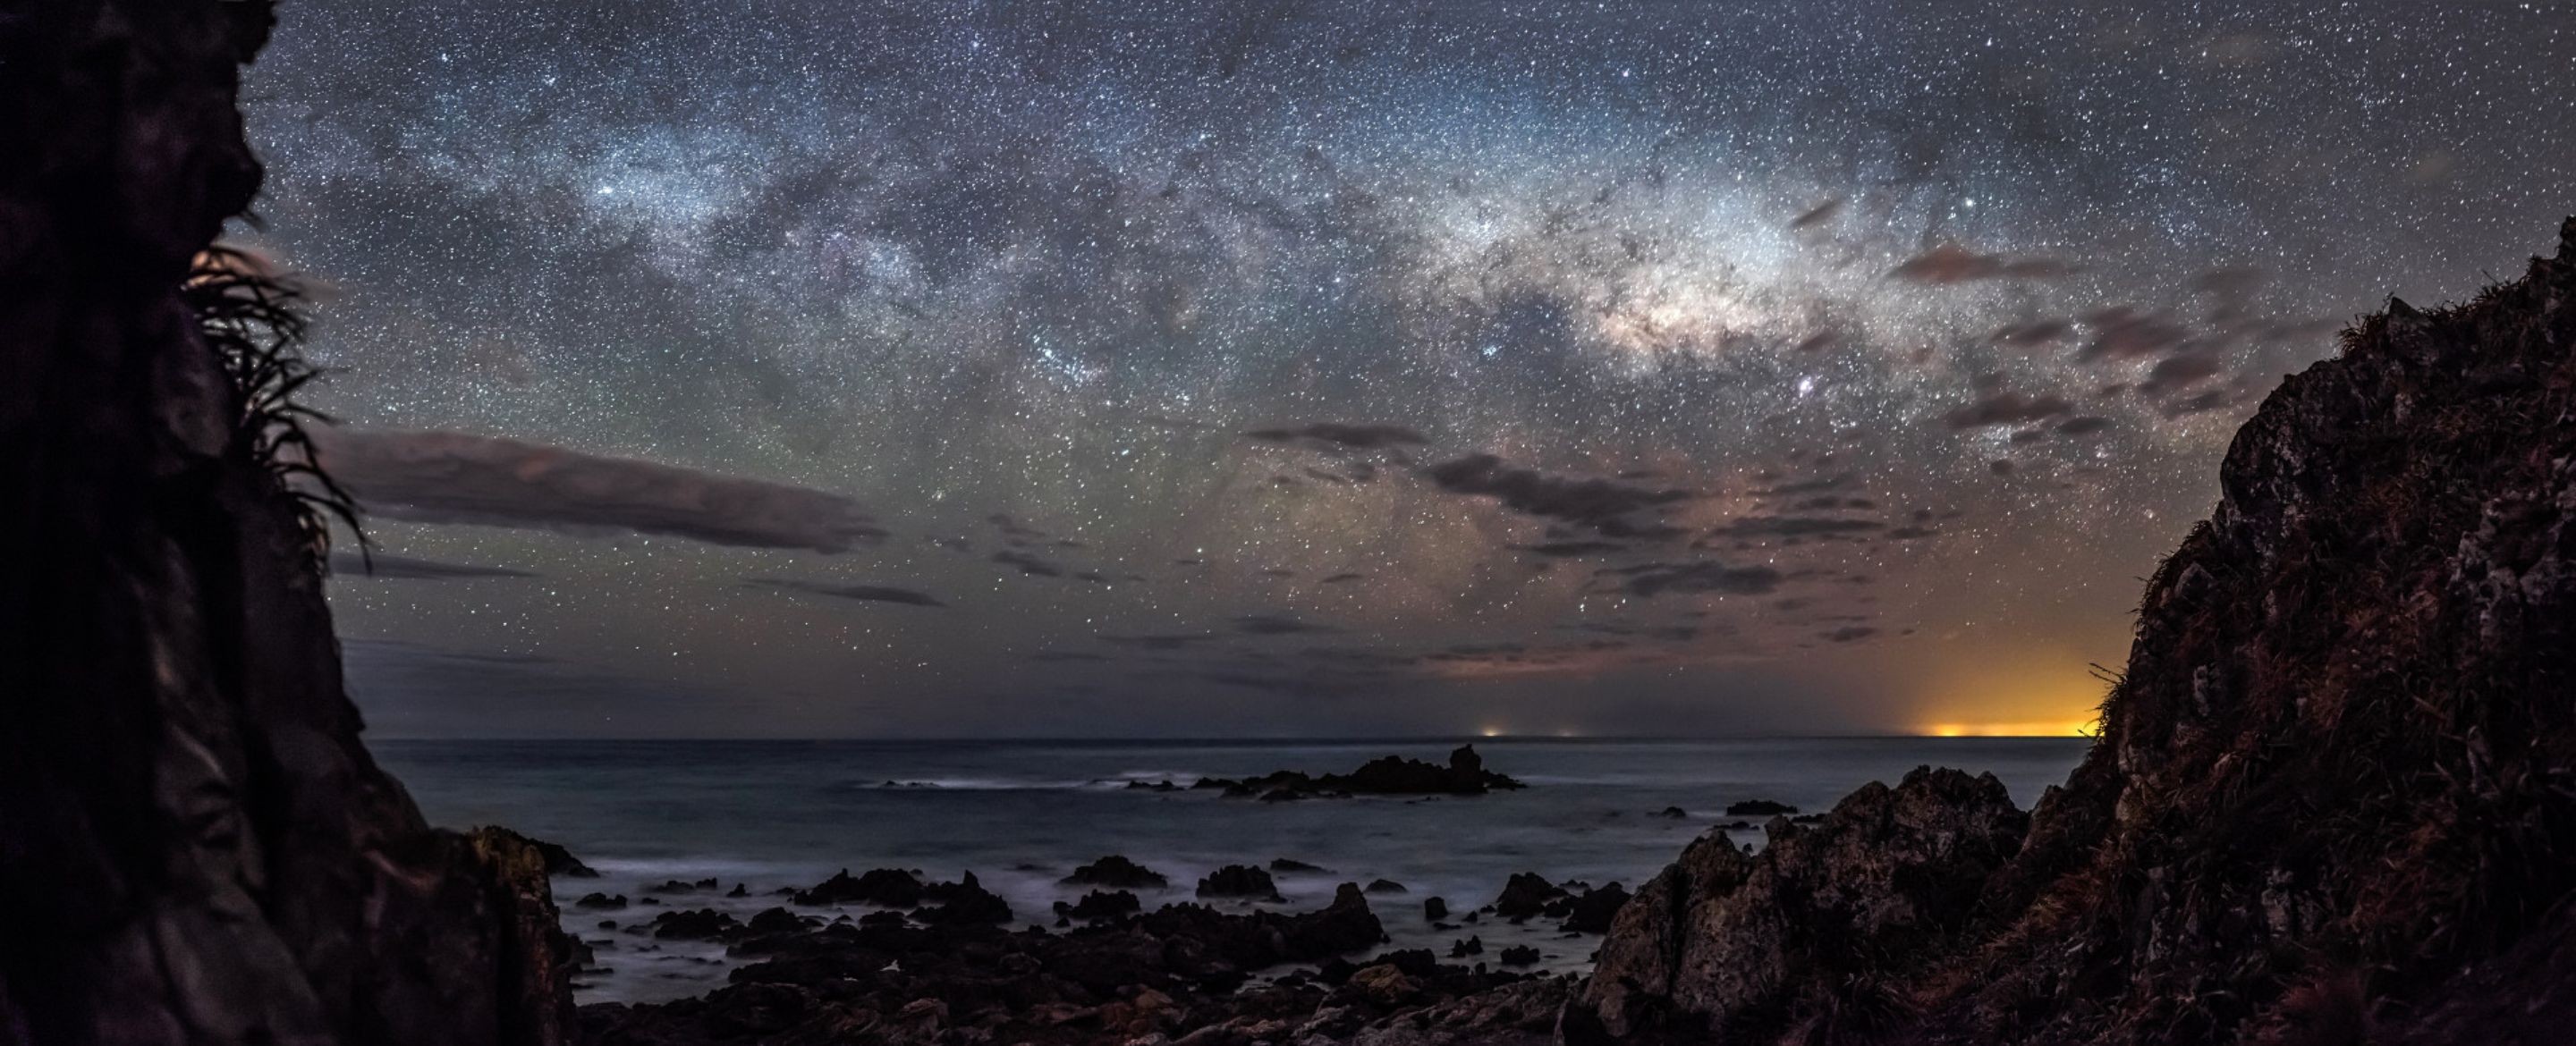 General 2880x1170 stars night landscape starry night sea rocks clouds long exposure galaxy nature coast